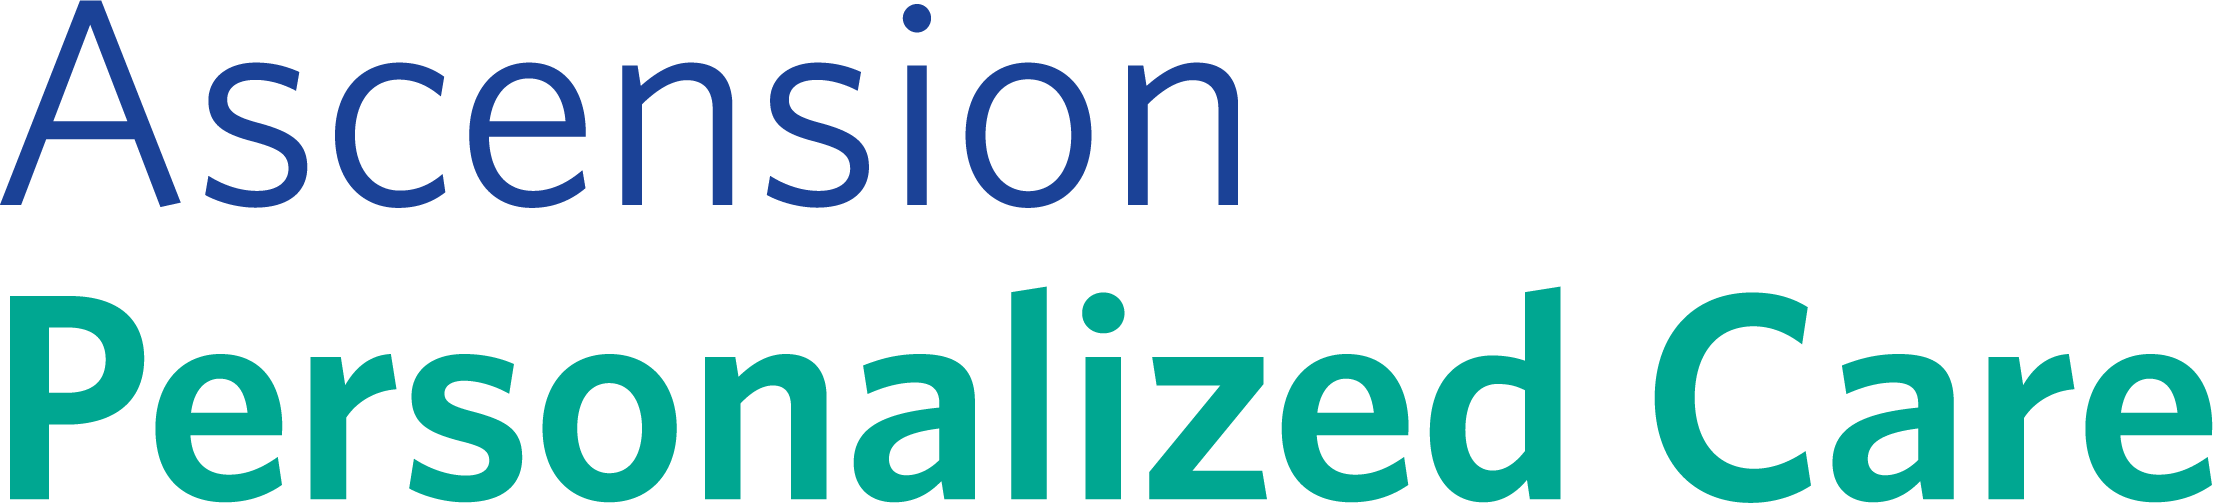 Ascension Personalized Care logo